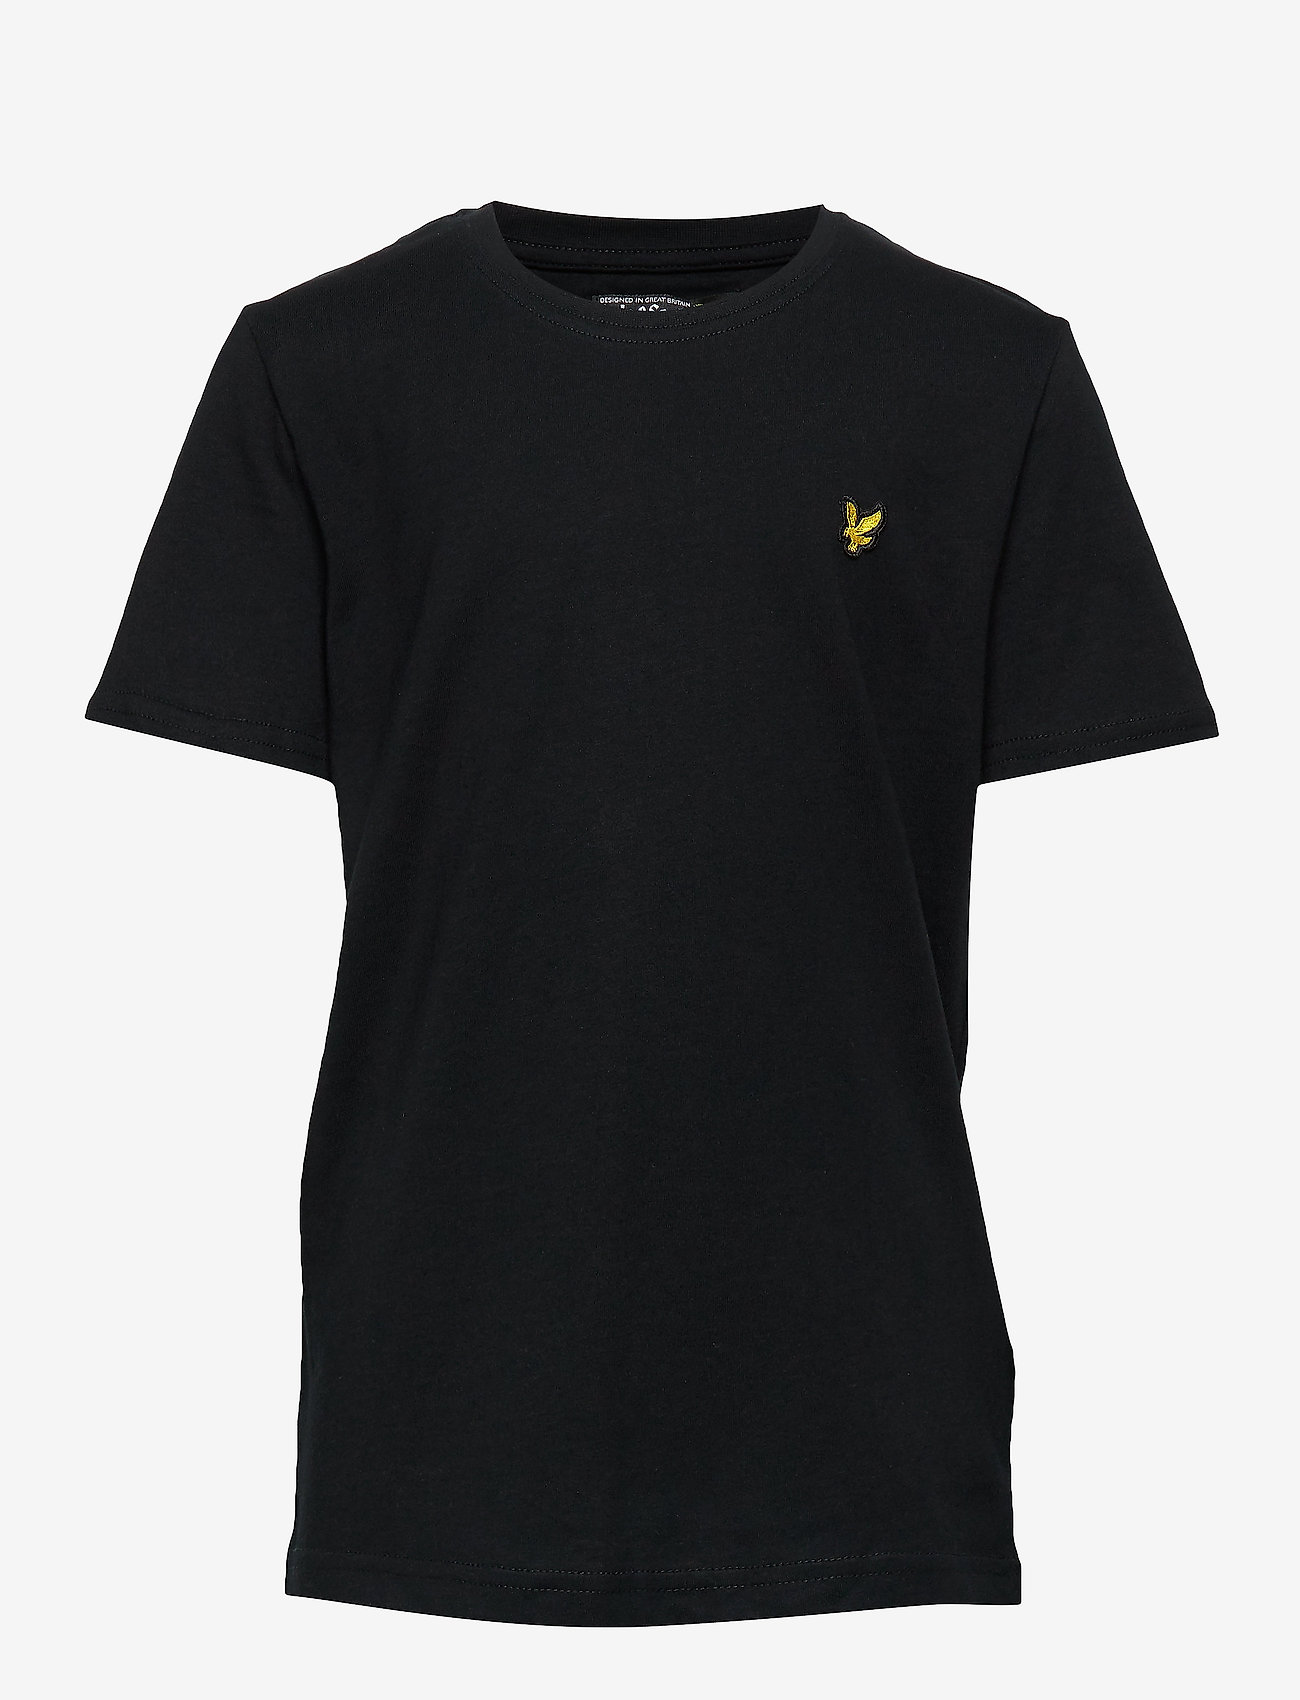 Lyle & Scott Junior - Classic T-Shirt - kortärmade t-shirts - true black - 0